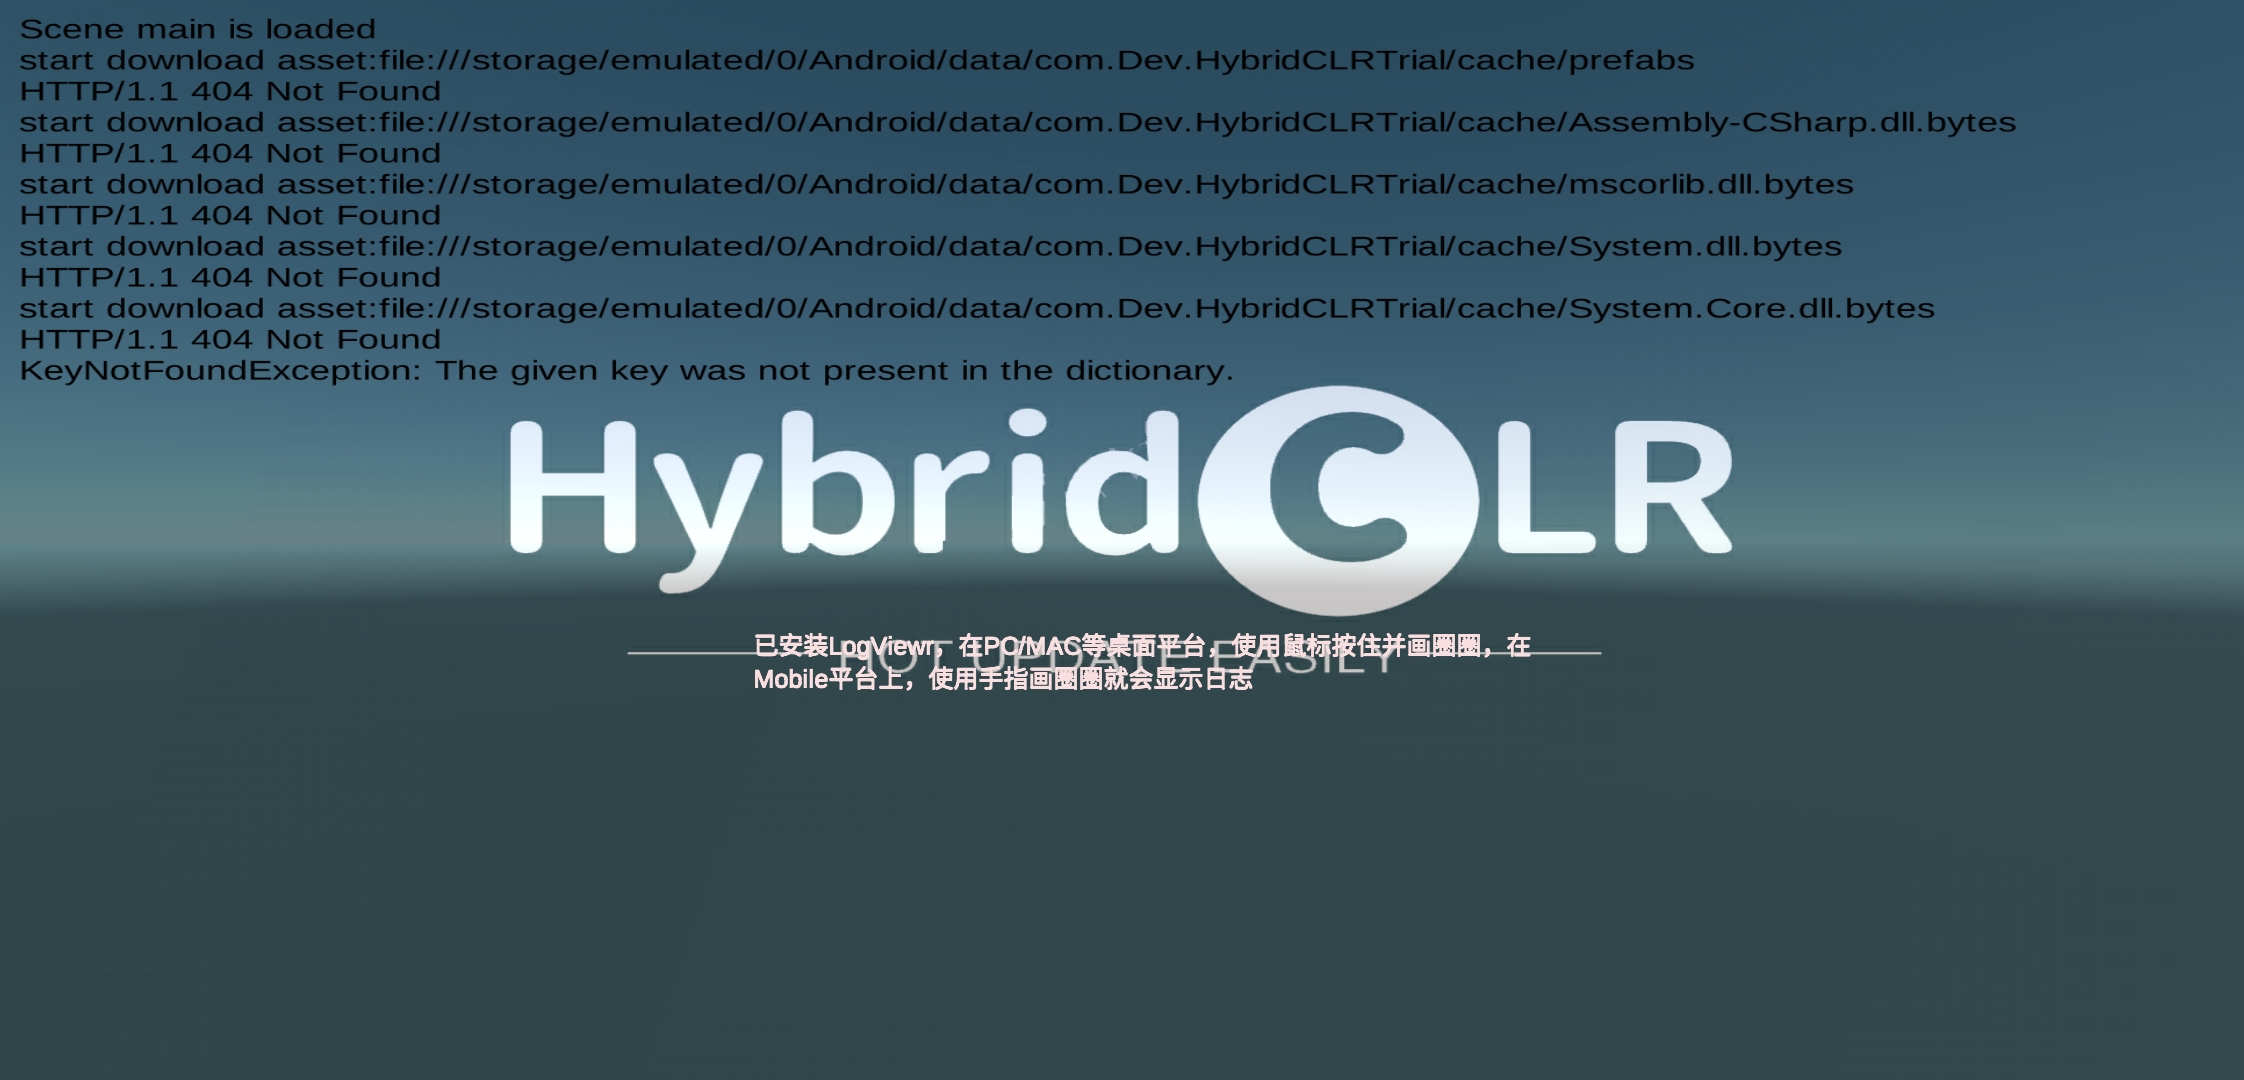 HybridCLR Demo load failed